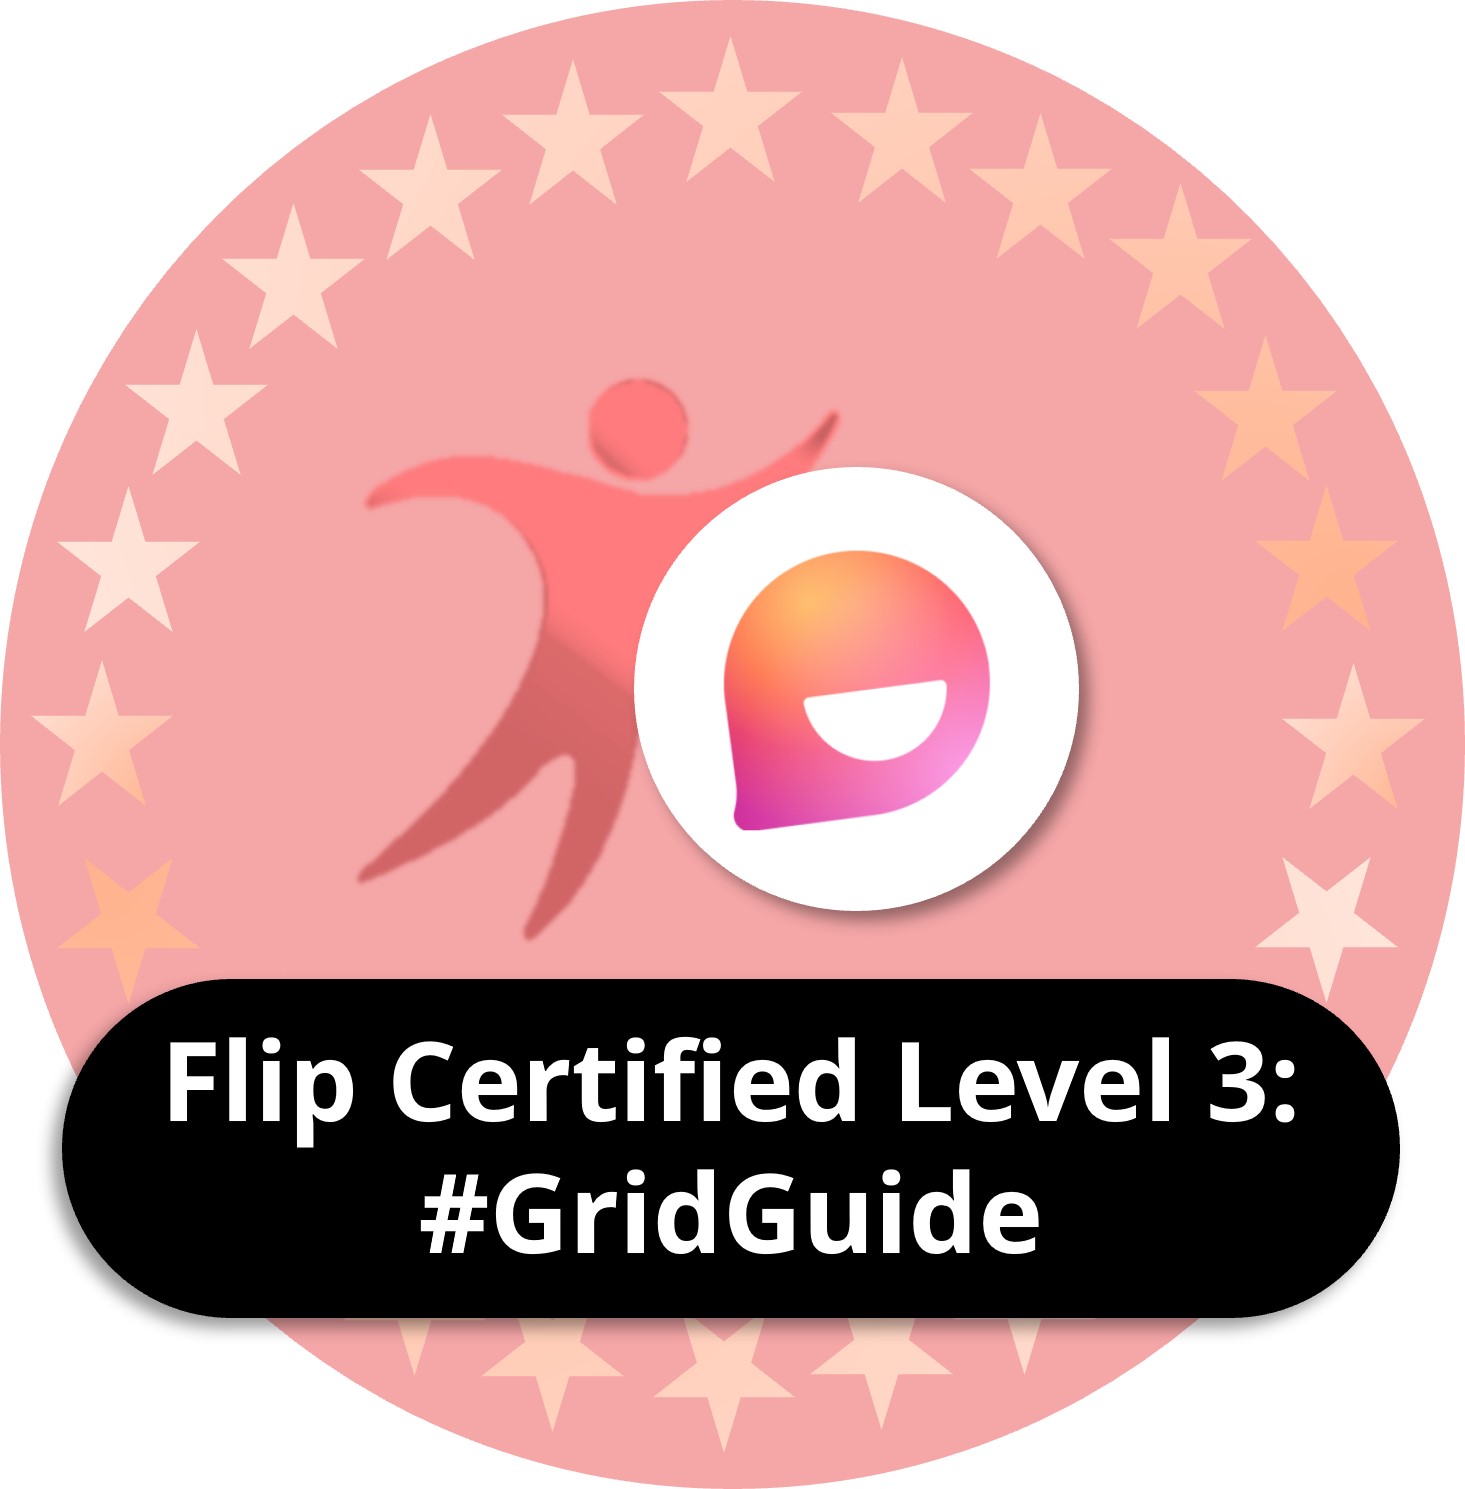 flip certified level 3: #Gridguide